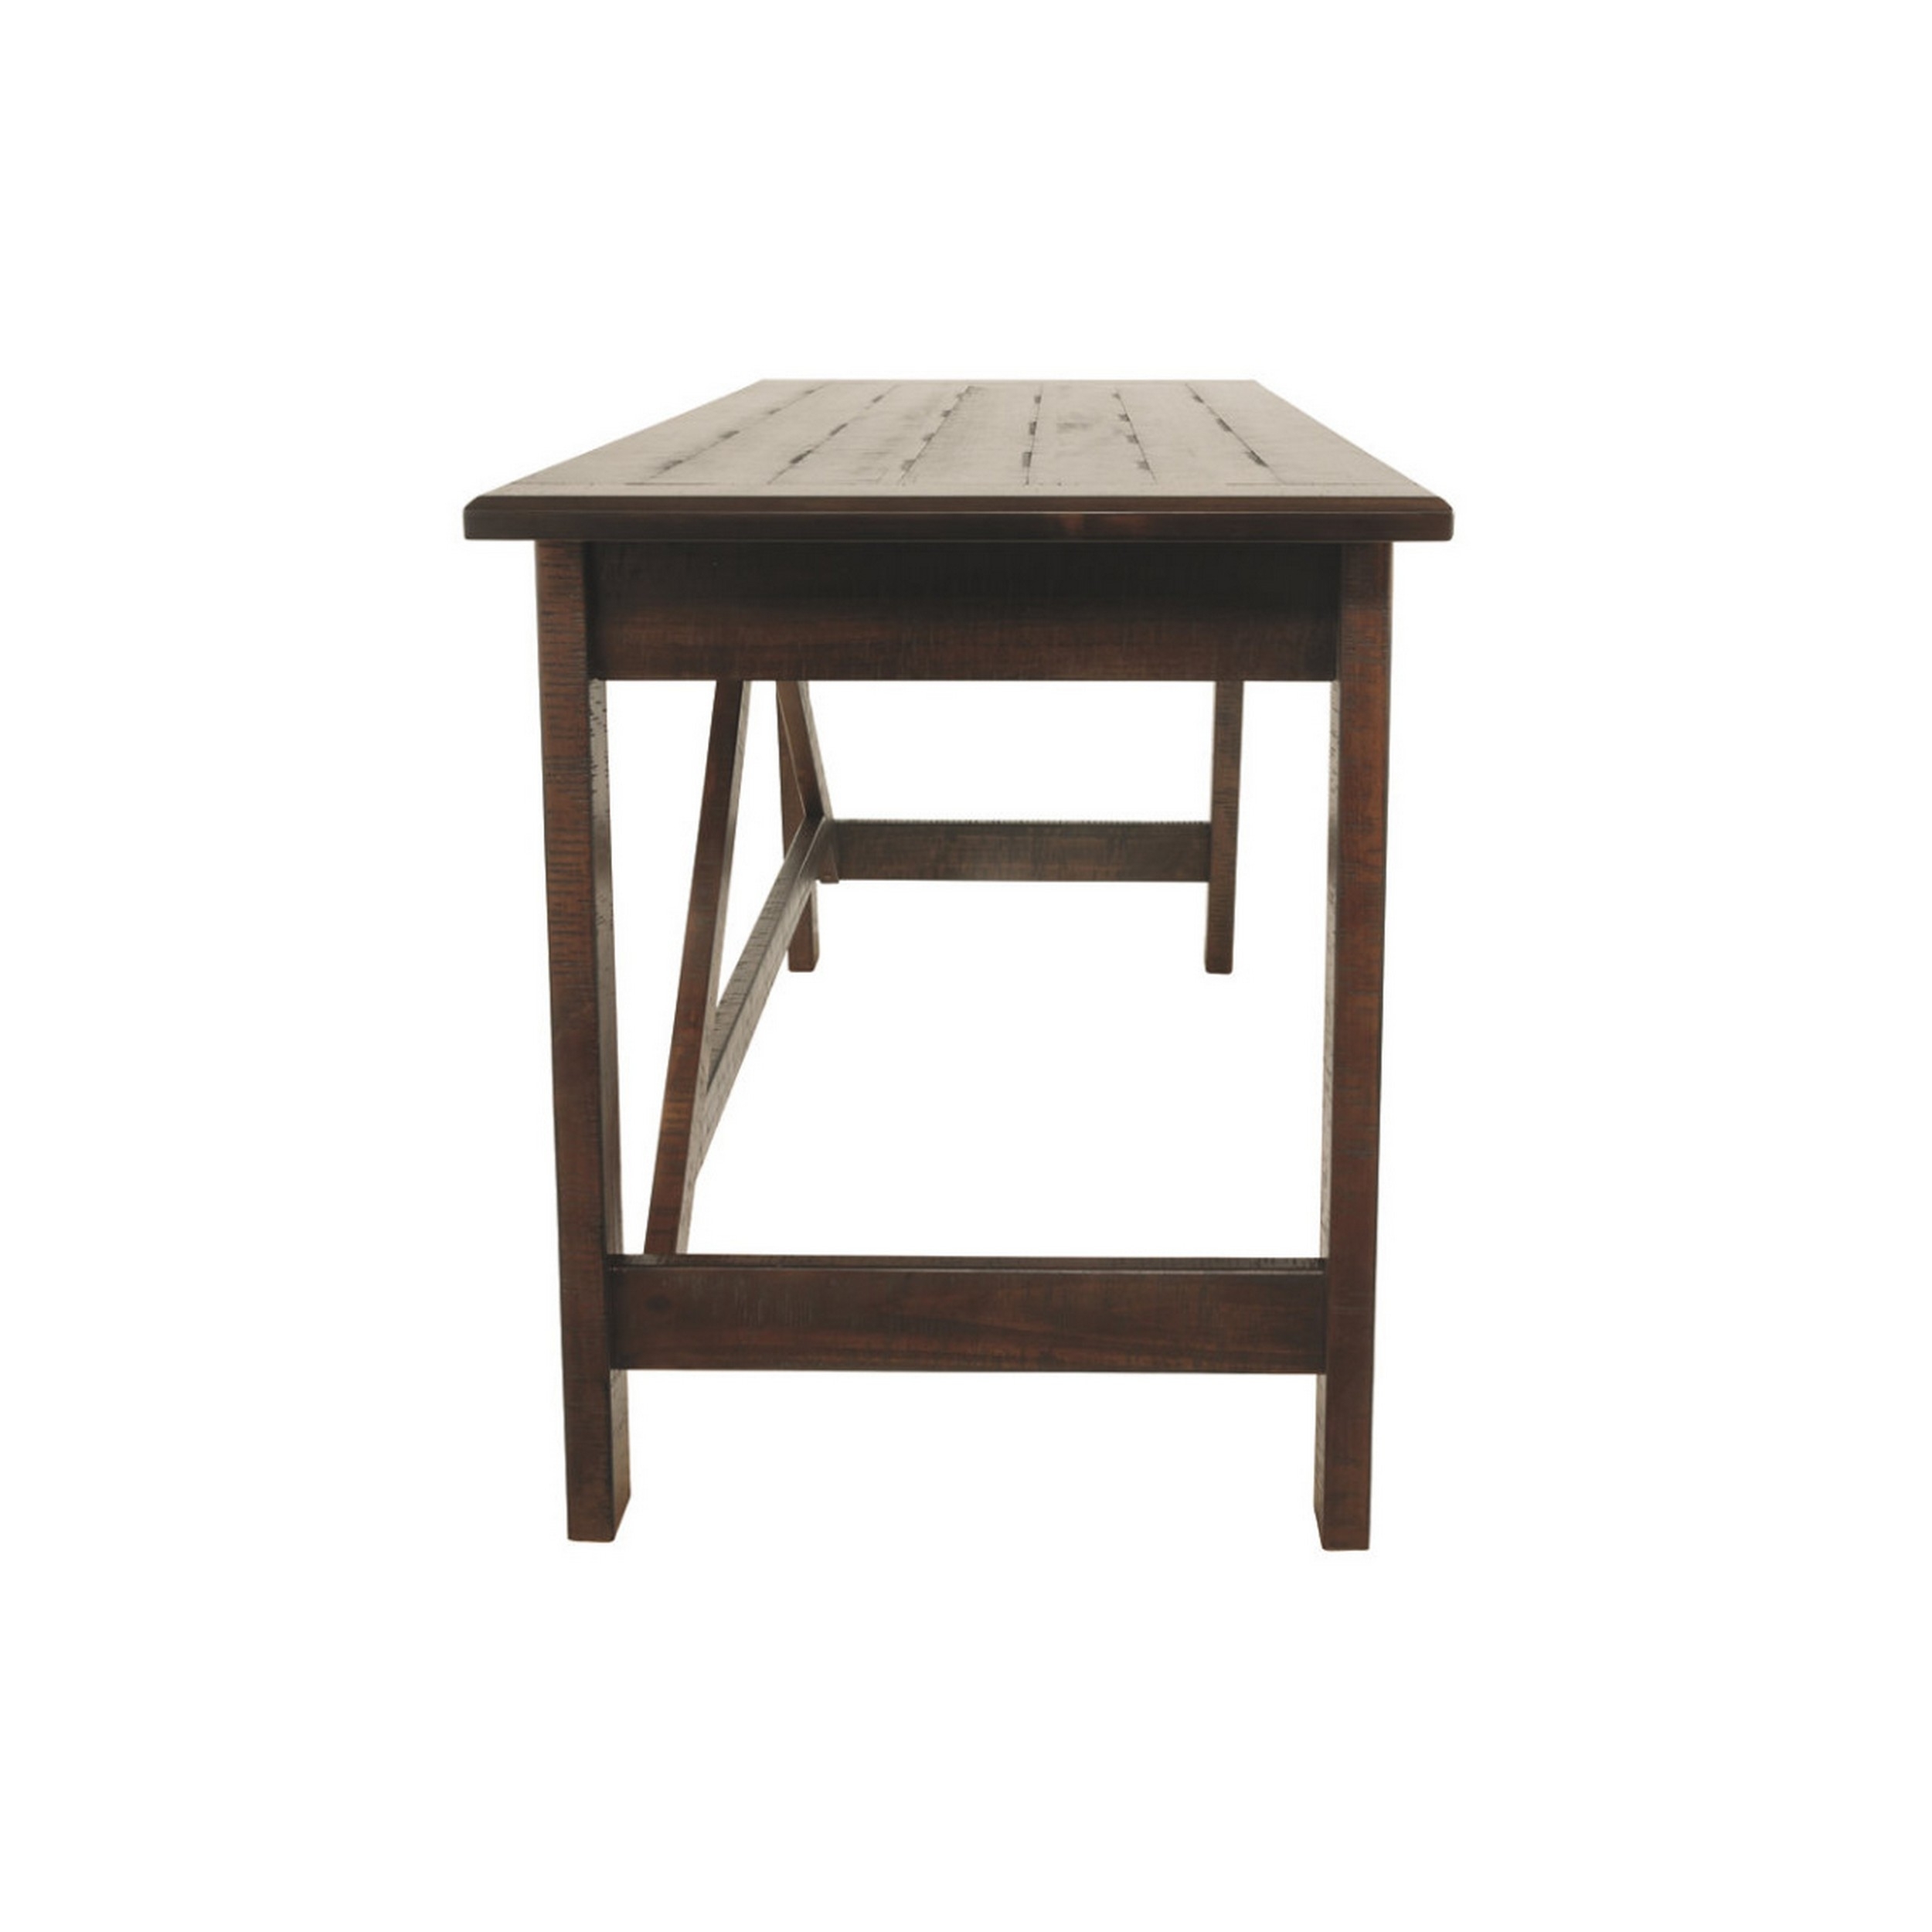 Two Drawers Wooden Desk With Cross Stretcher Brace Design, Large, Brown- Saltoro Sherpi